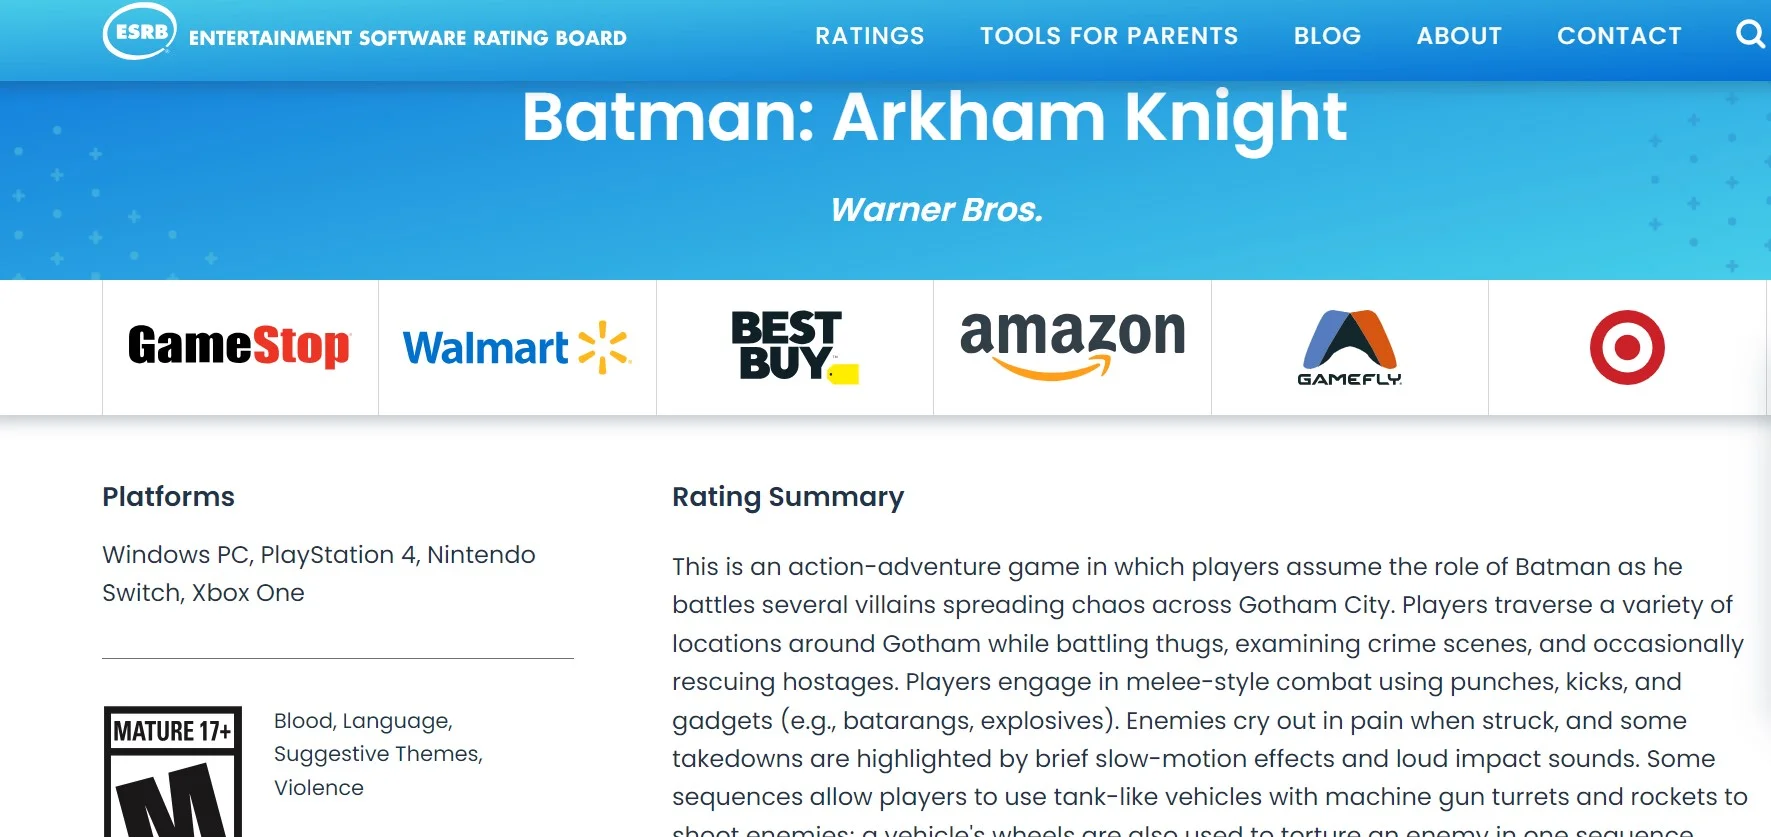 Batman Arkham Trilogy Nintendo Switch Americano Esrb